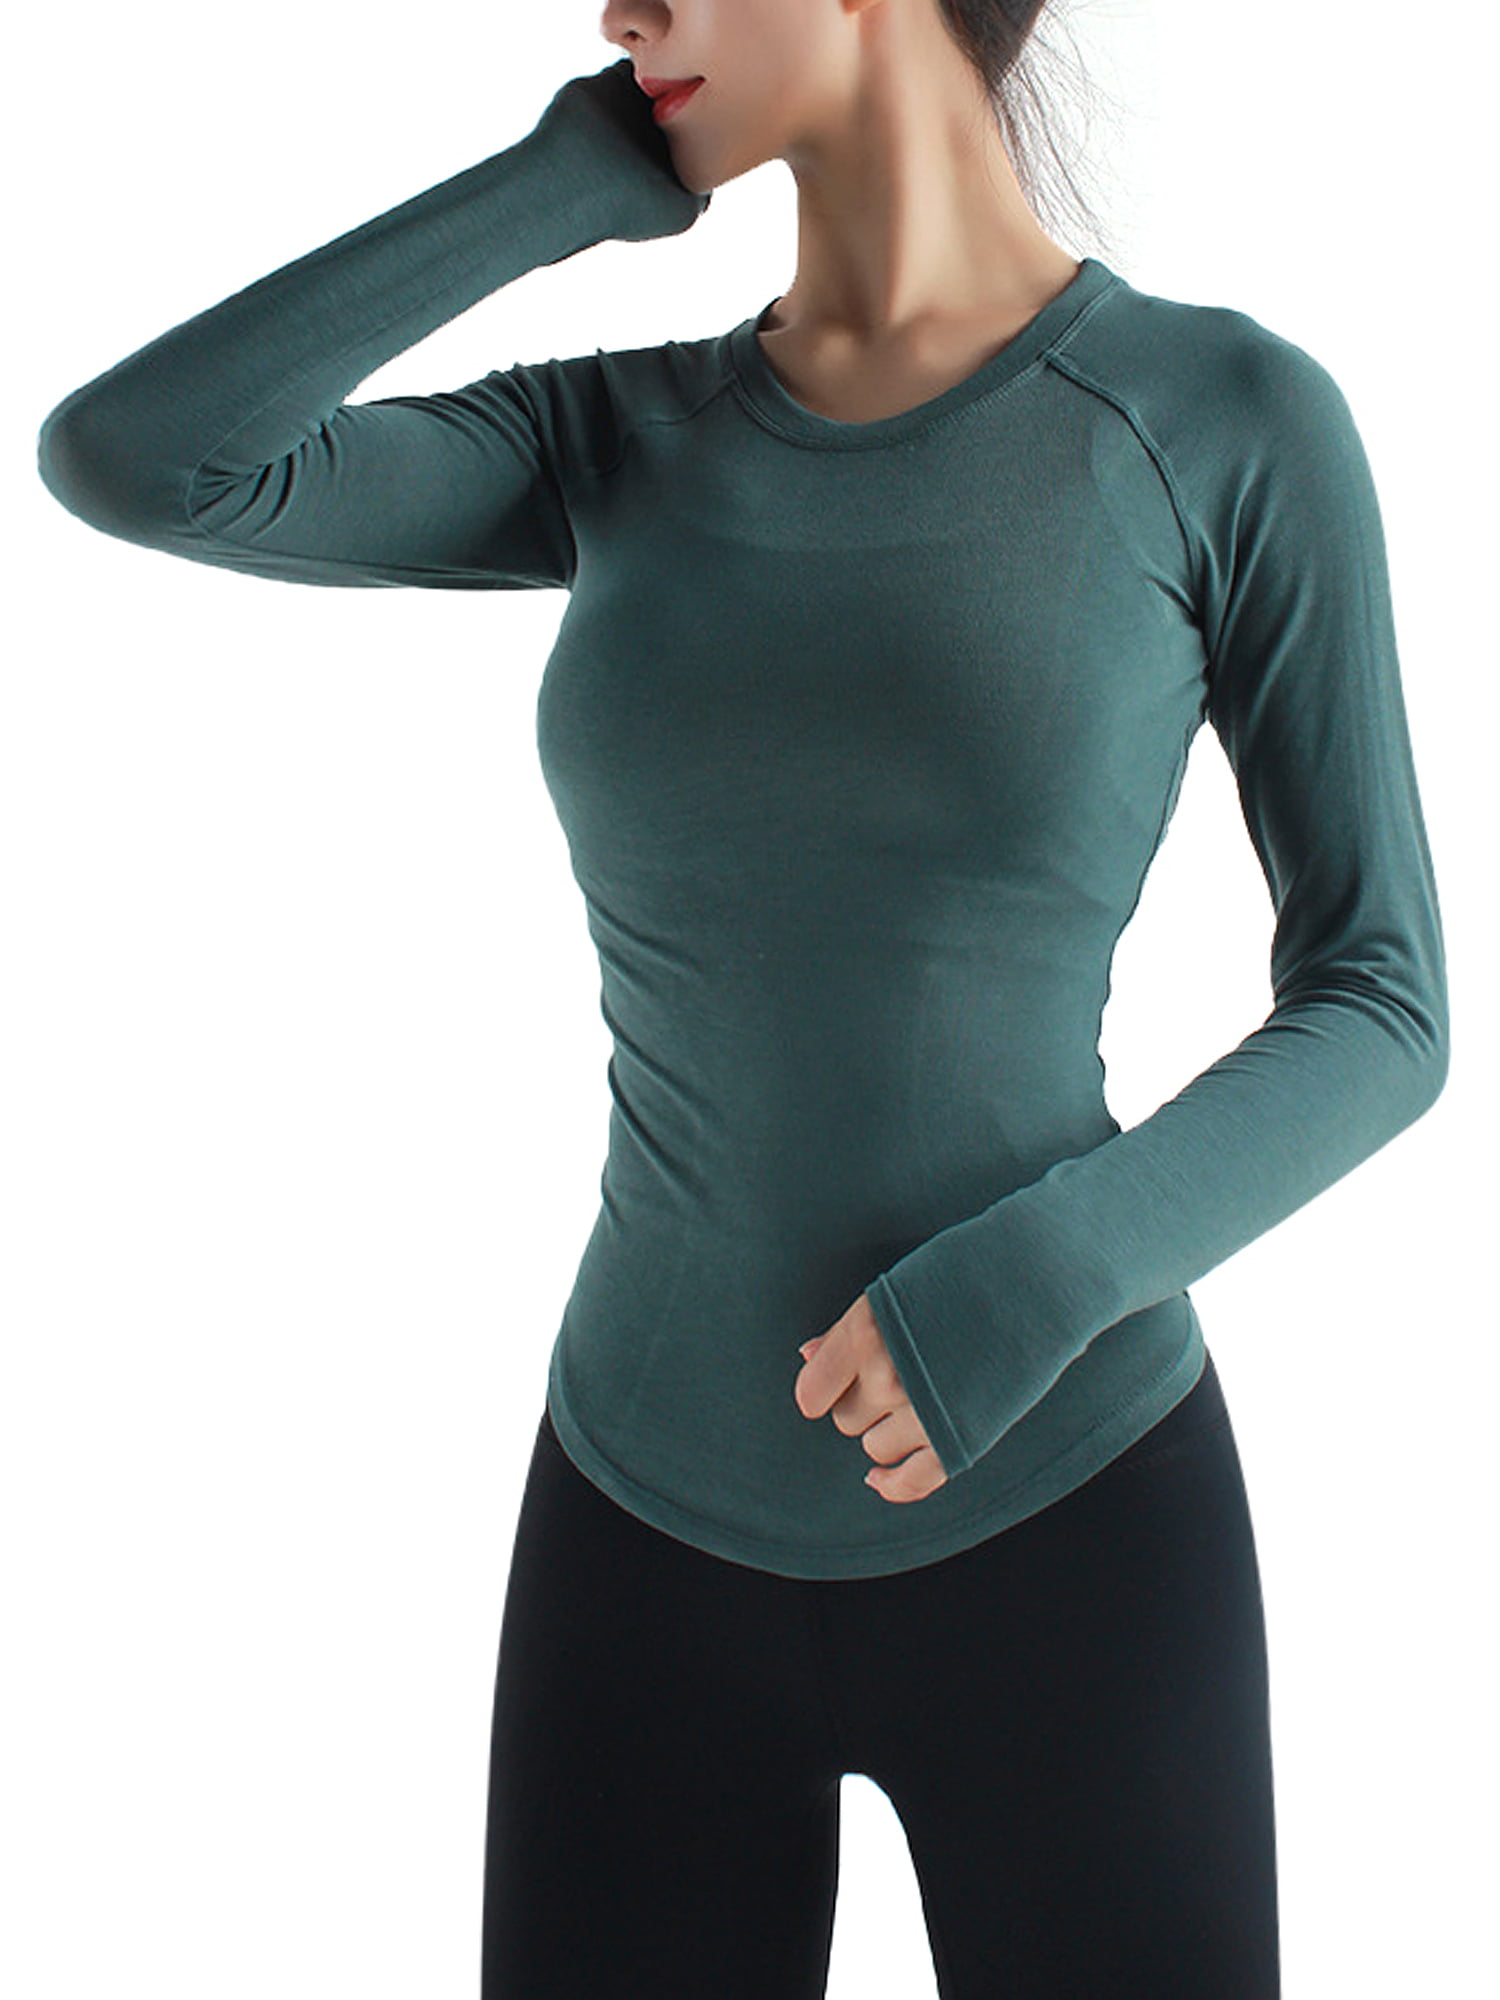 new women lady gym sports shirt yoga top fitness fashion running t-sh Rv 